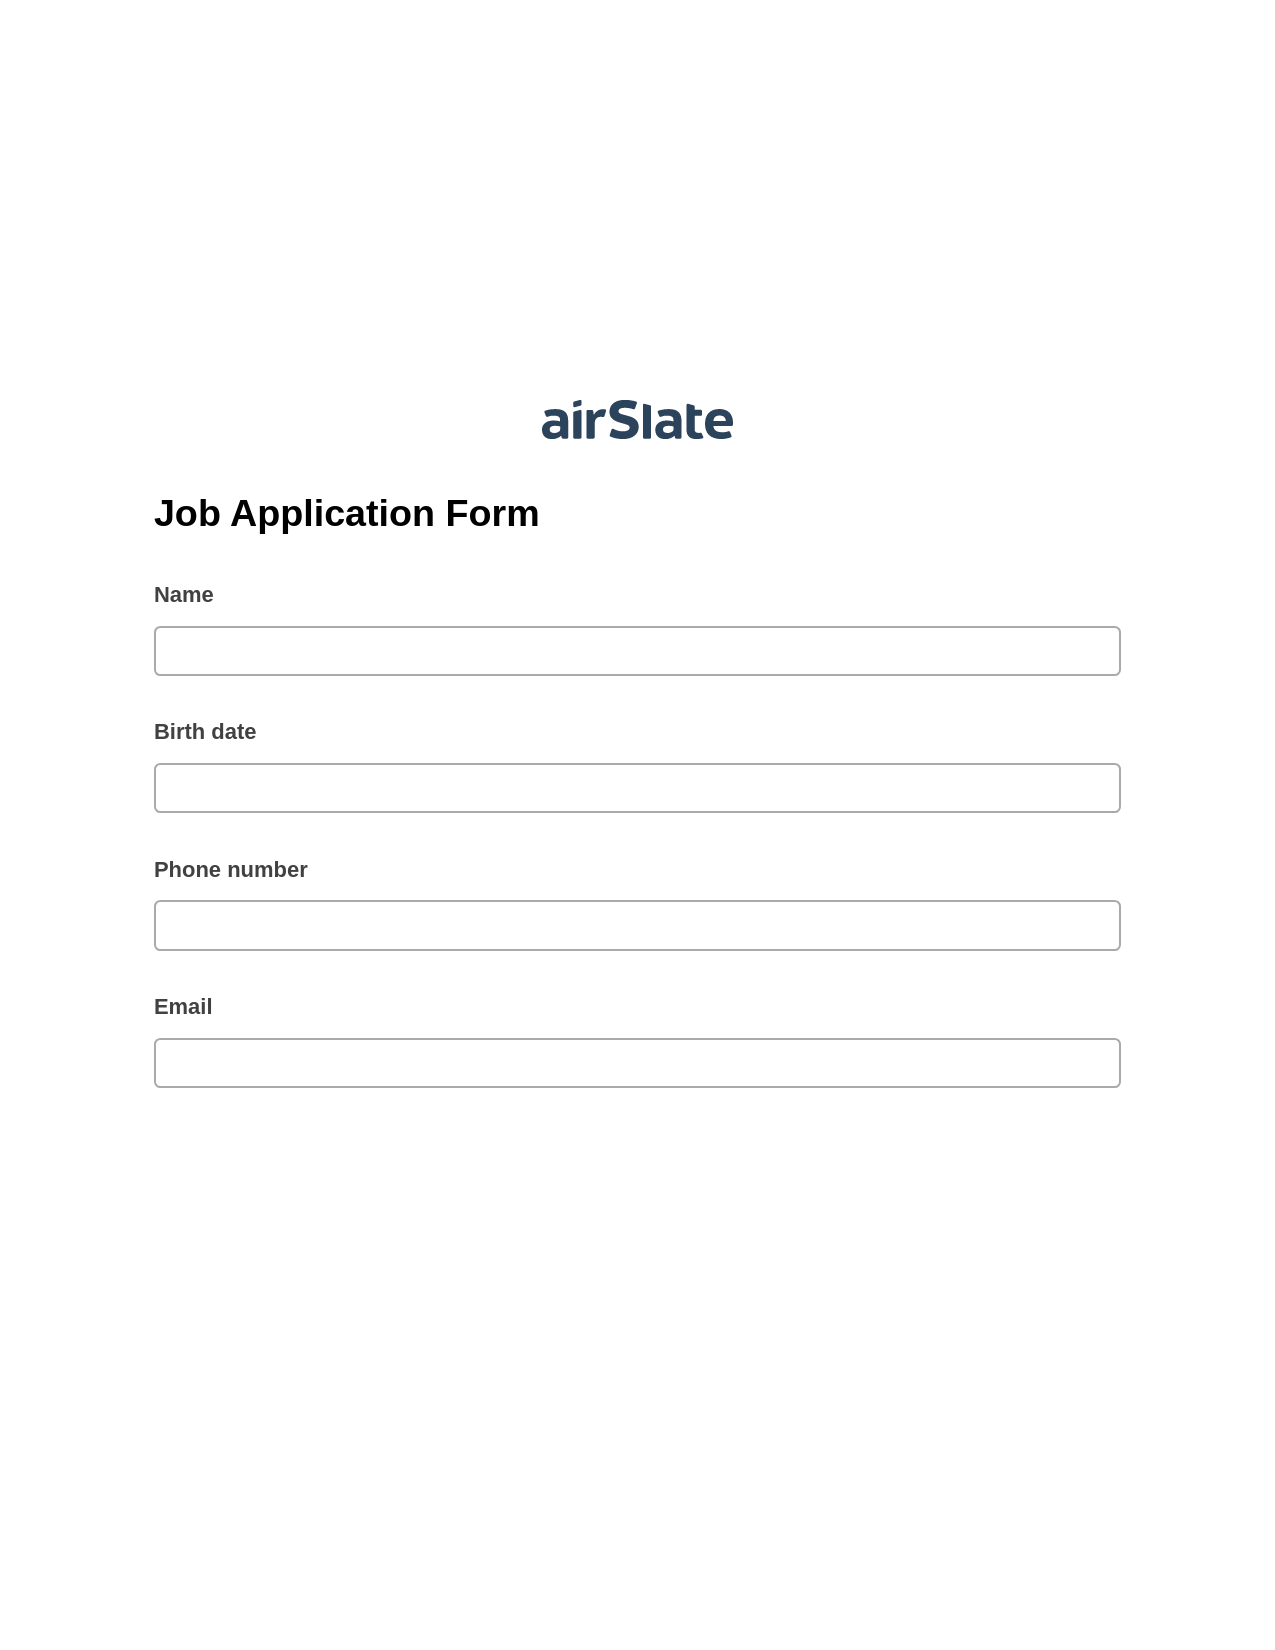 Multirole Job Application Form Pre-fill from MySQL Dropdown Options Bot, Update Salesforce Record Bot, Webhook Postfinish Bot